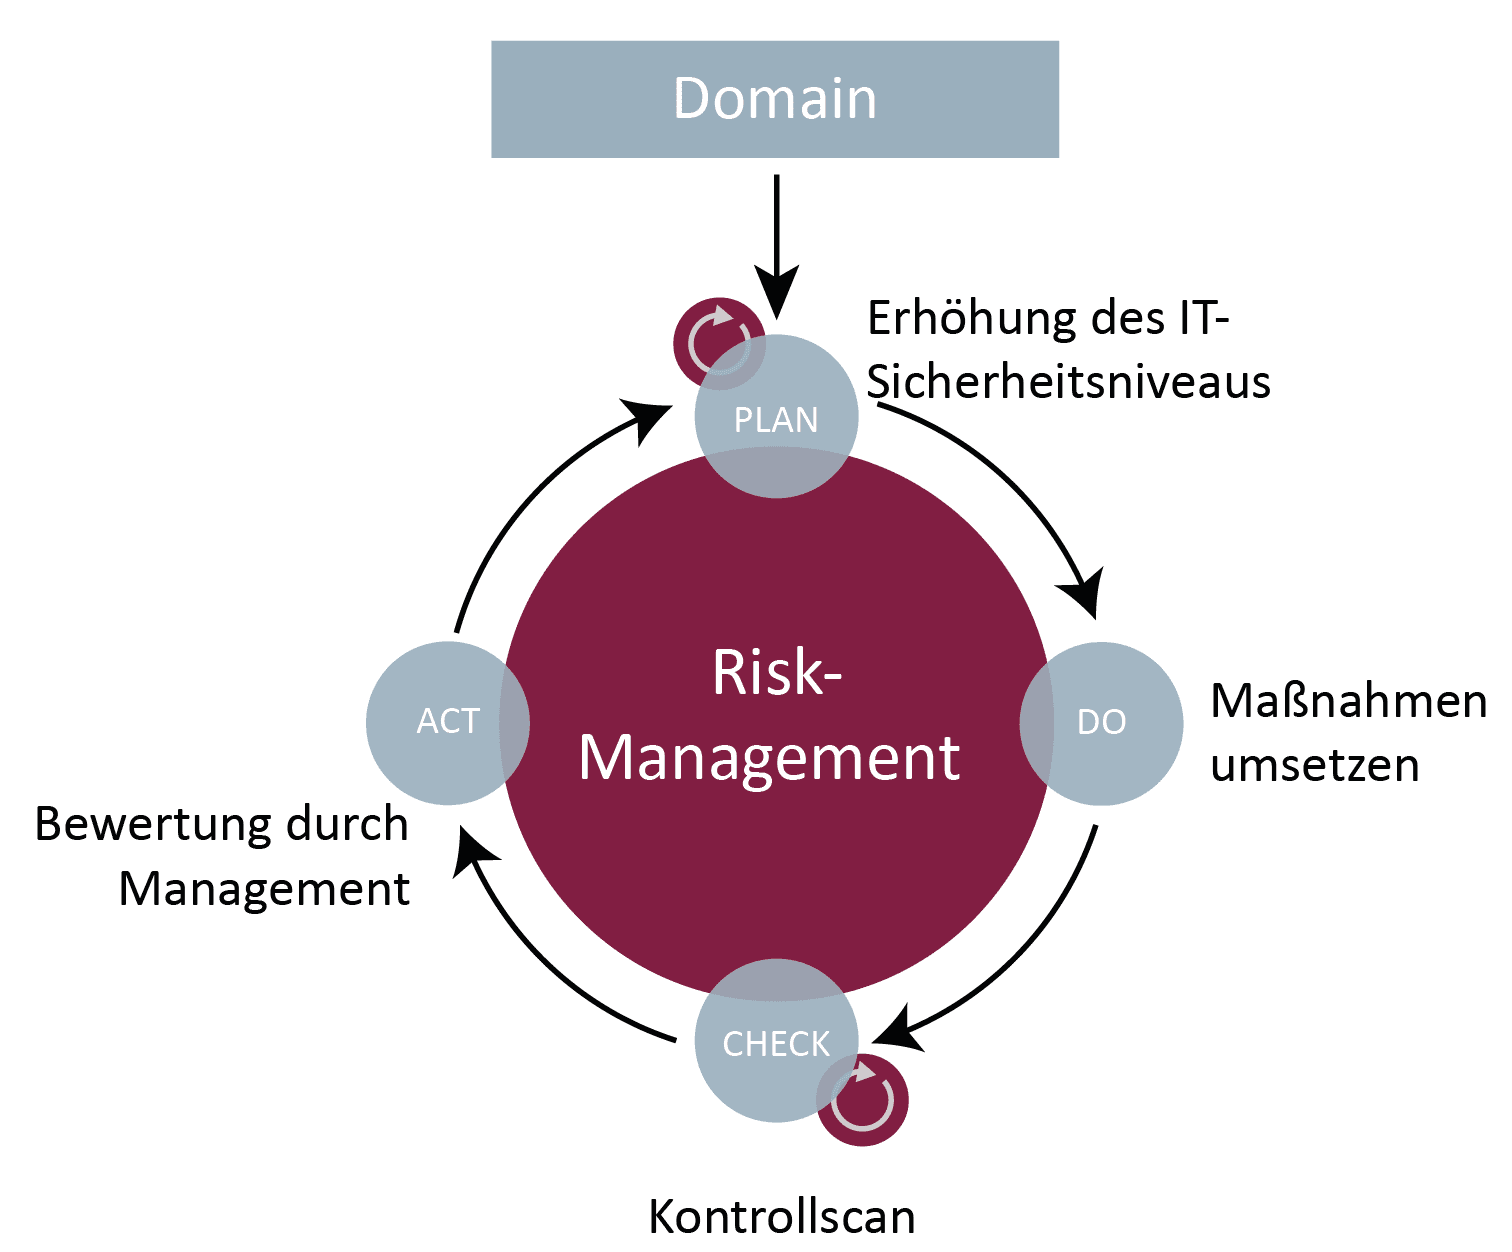 Digital Risk Management (DRM) als Ablaufdiagramm